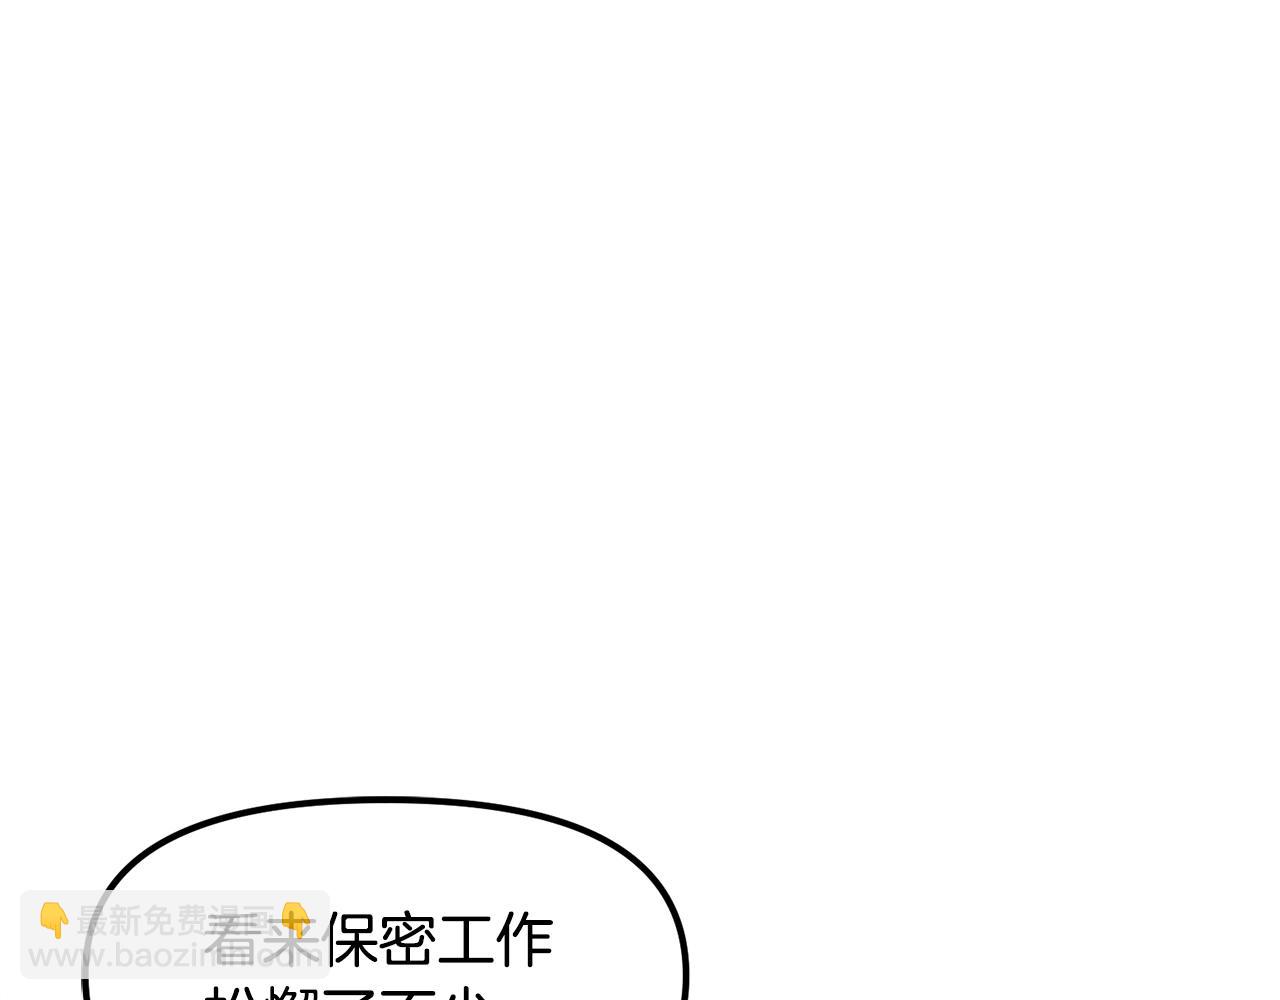 ARK：遊戲新世界 - 第111話 暗殺委託(1/5) - 3